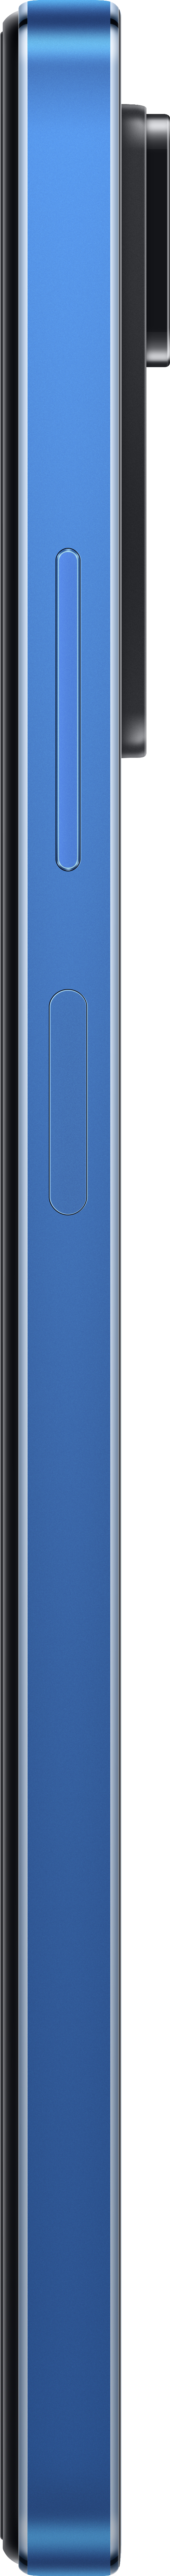 XIAOMI Redmi 11 Atlantic SIM Note Pro Blue Dual GB 5G 128